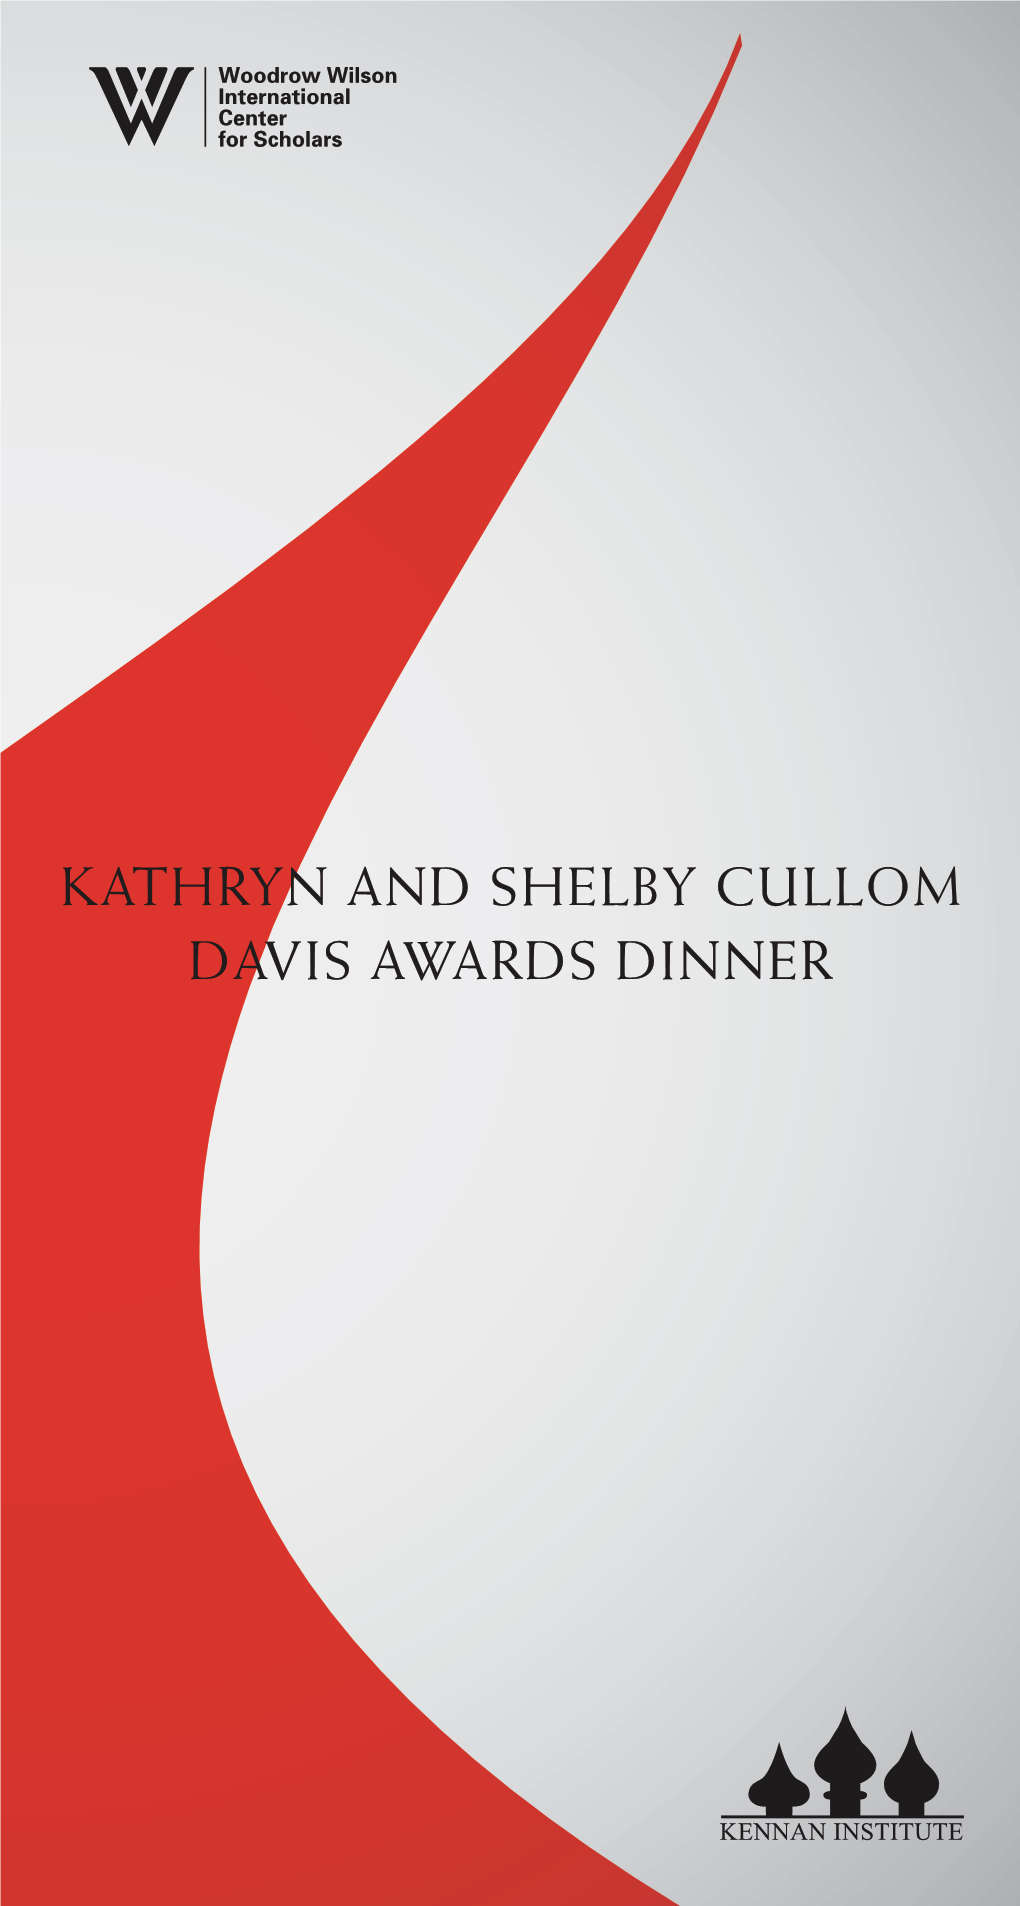 Kathryn and Shelby Cullom Davis Awards Dinner Invitation